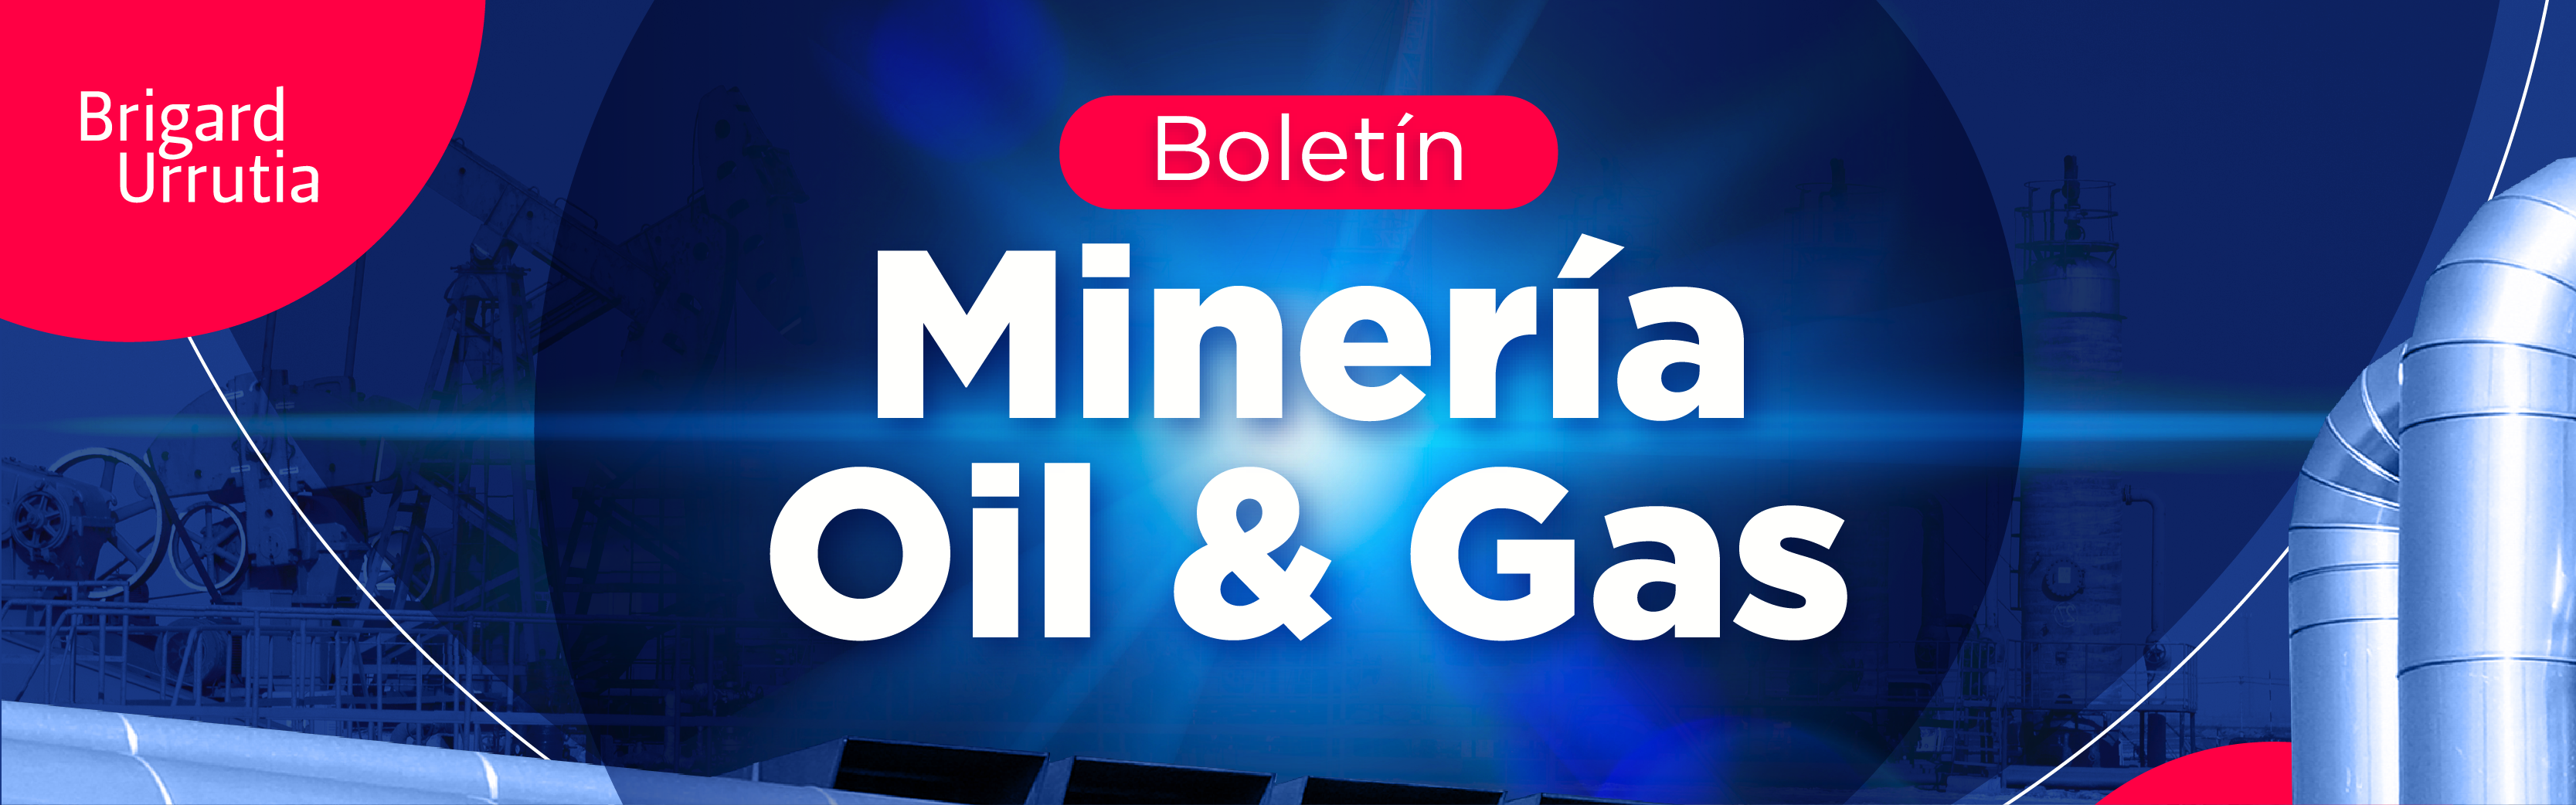 Boletín Mining, Oil & Gas